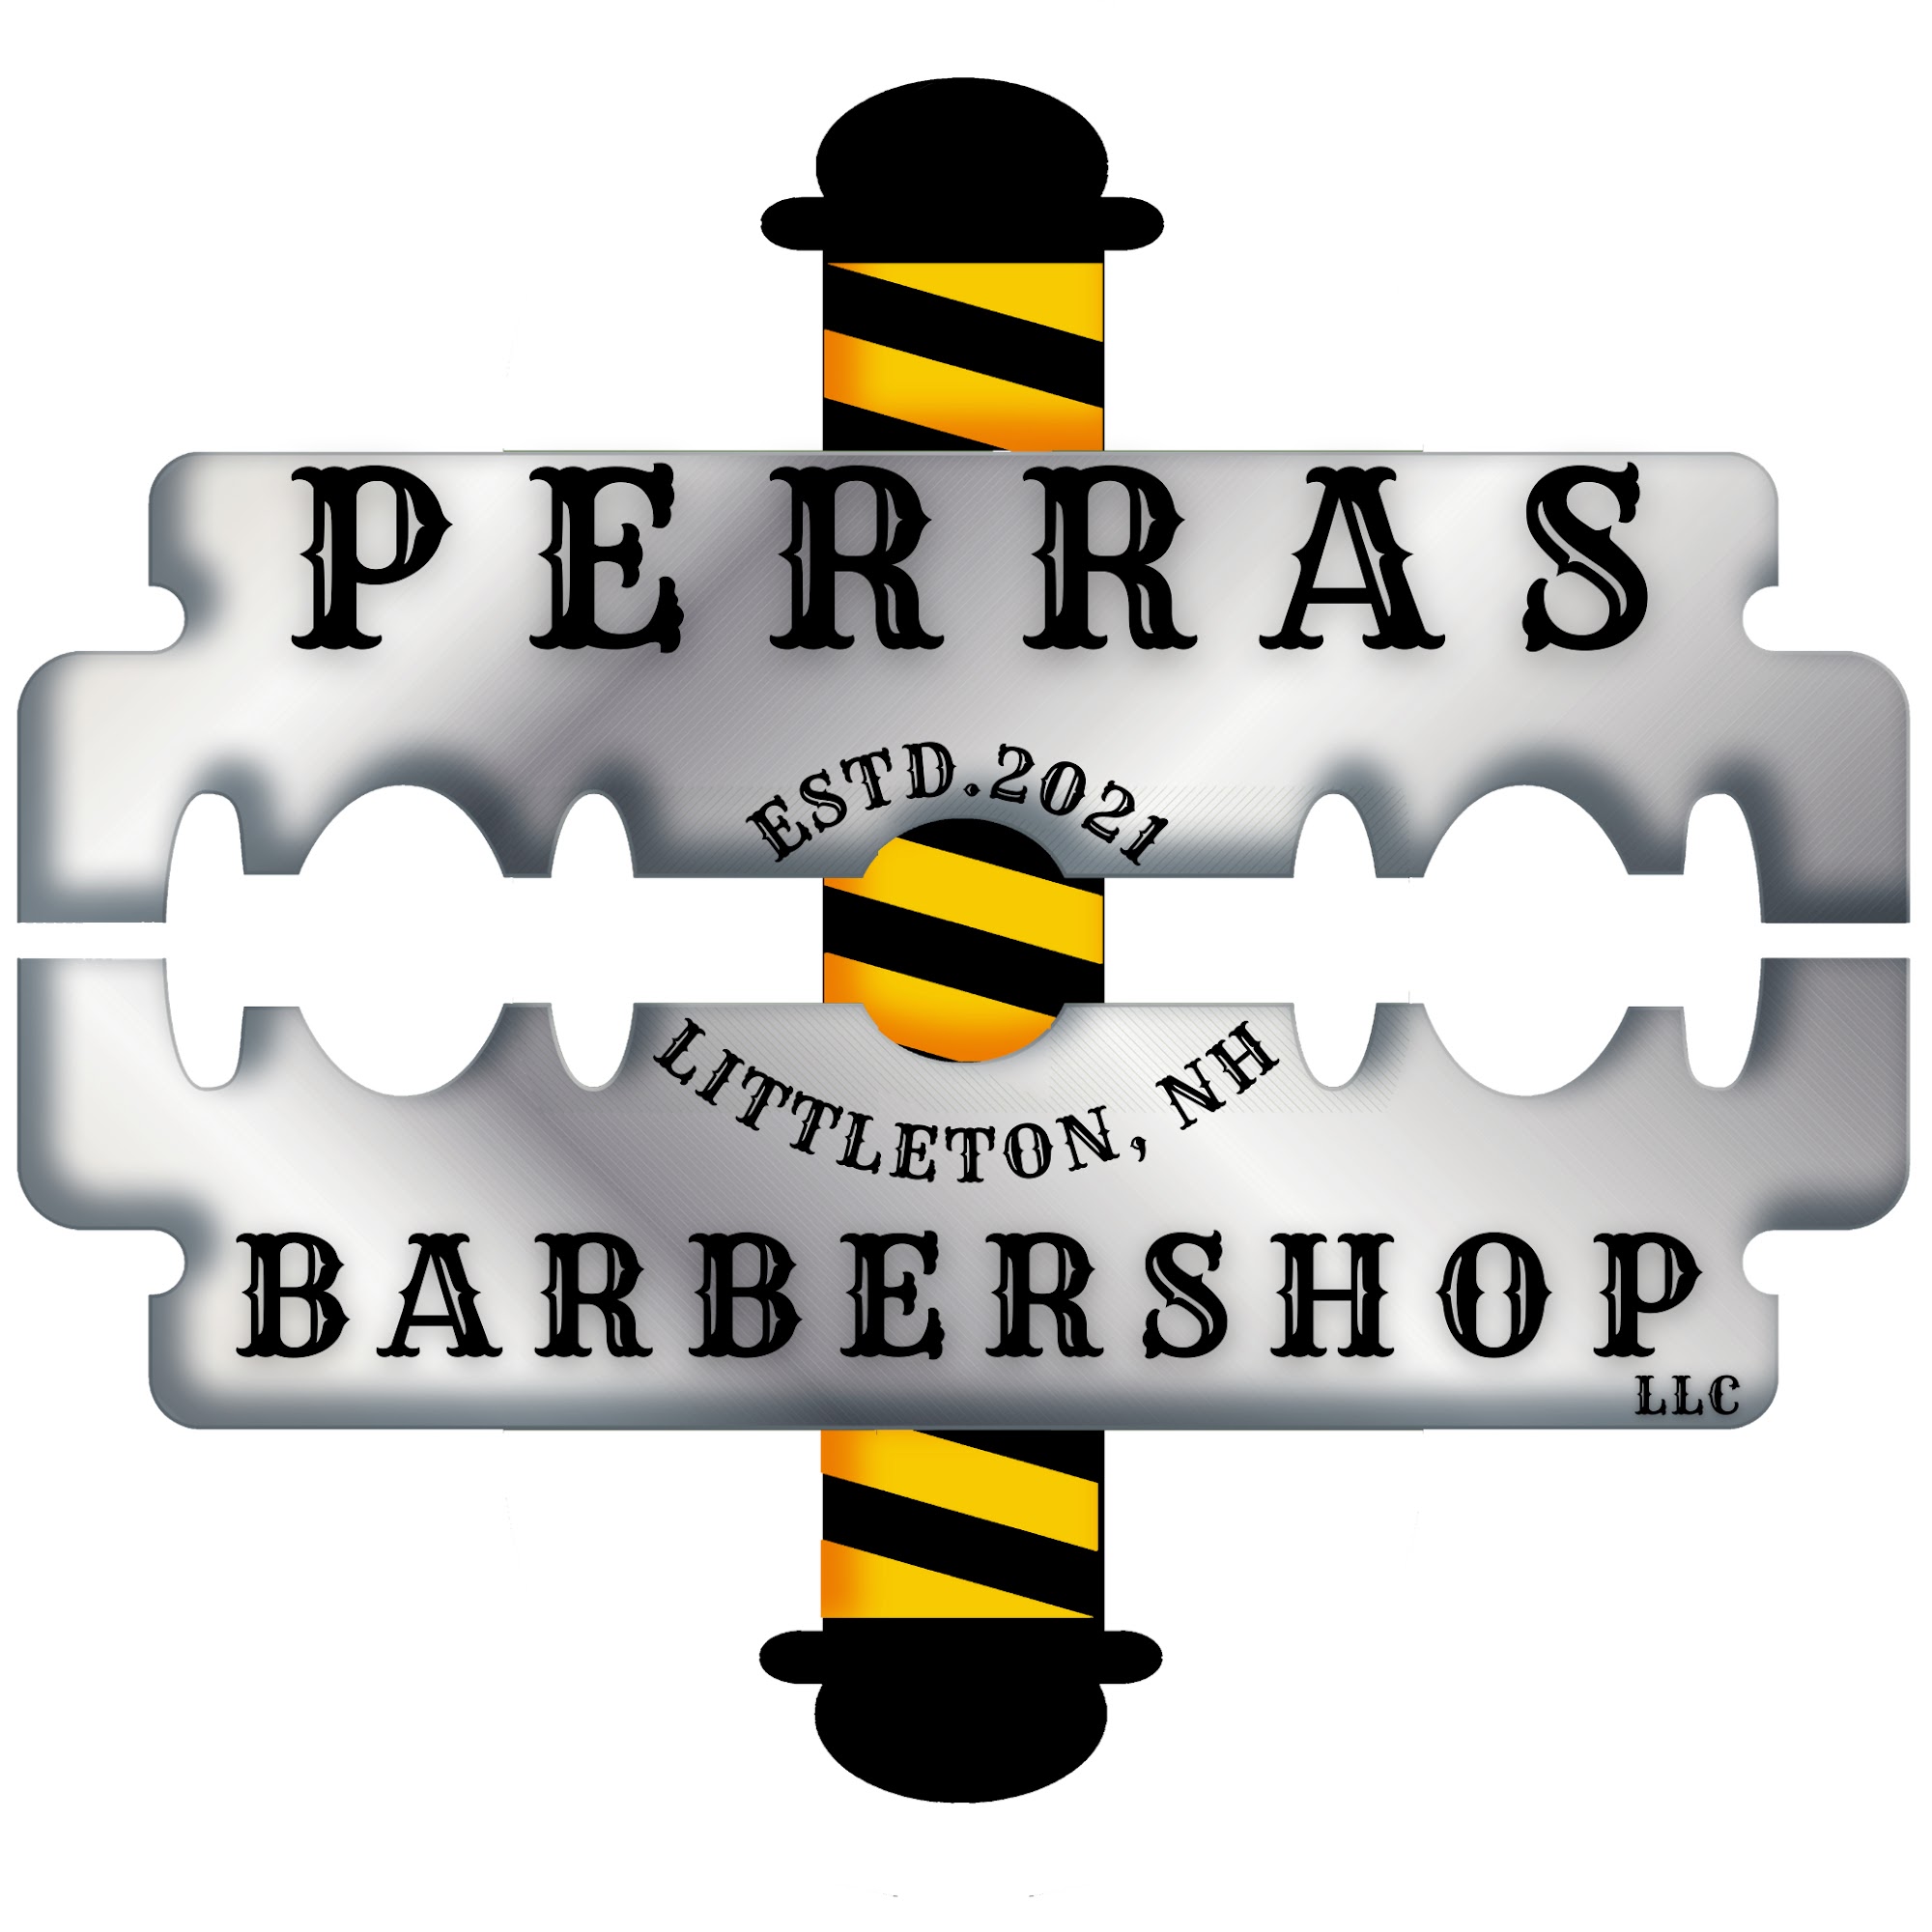 Perras Barbershop LLC 87 Main St Suite 2, Littleton New Hampshire 03561